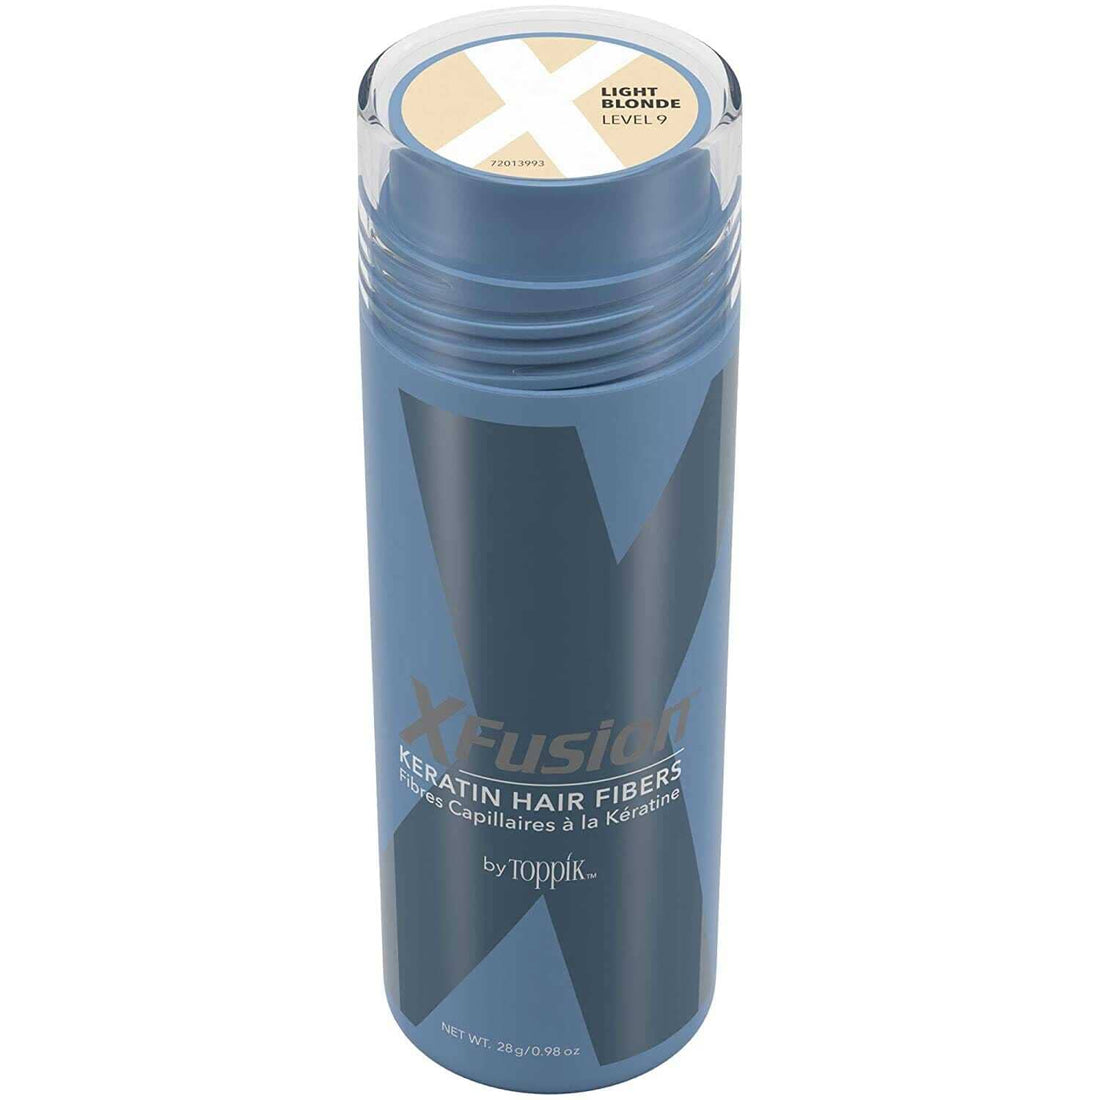 XFusion Keratin Hair Fibers XFusion by Toppik Light Blonde 0.98 oz Shop at Skin Type Solutions